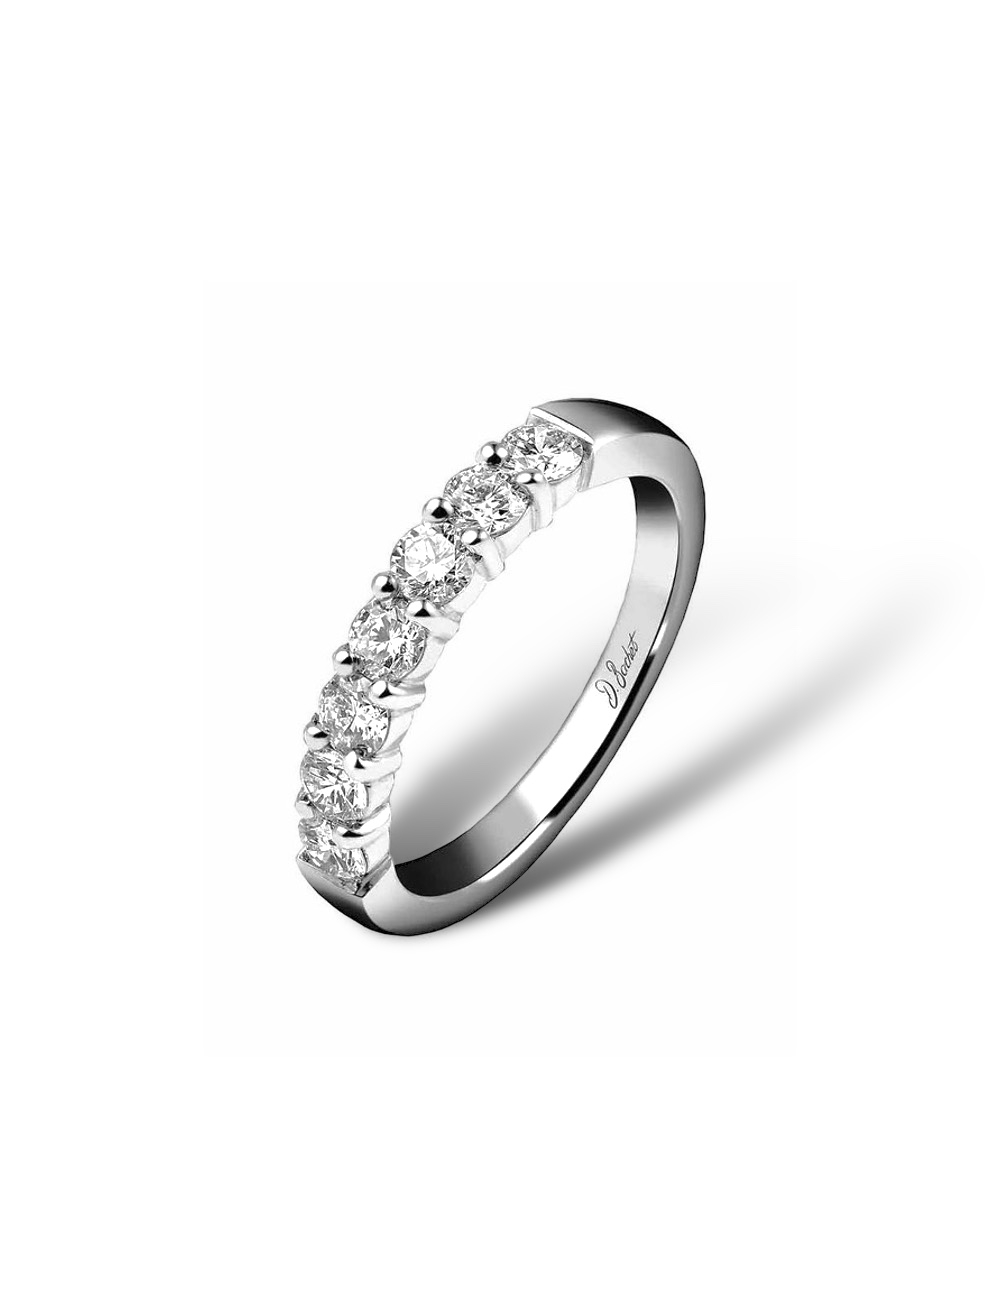 Platinum wedding ring for women, elegantly designed with white diamonds in prong settings, radiating sophistication.